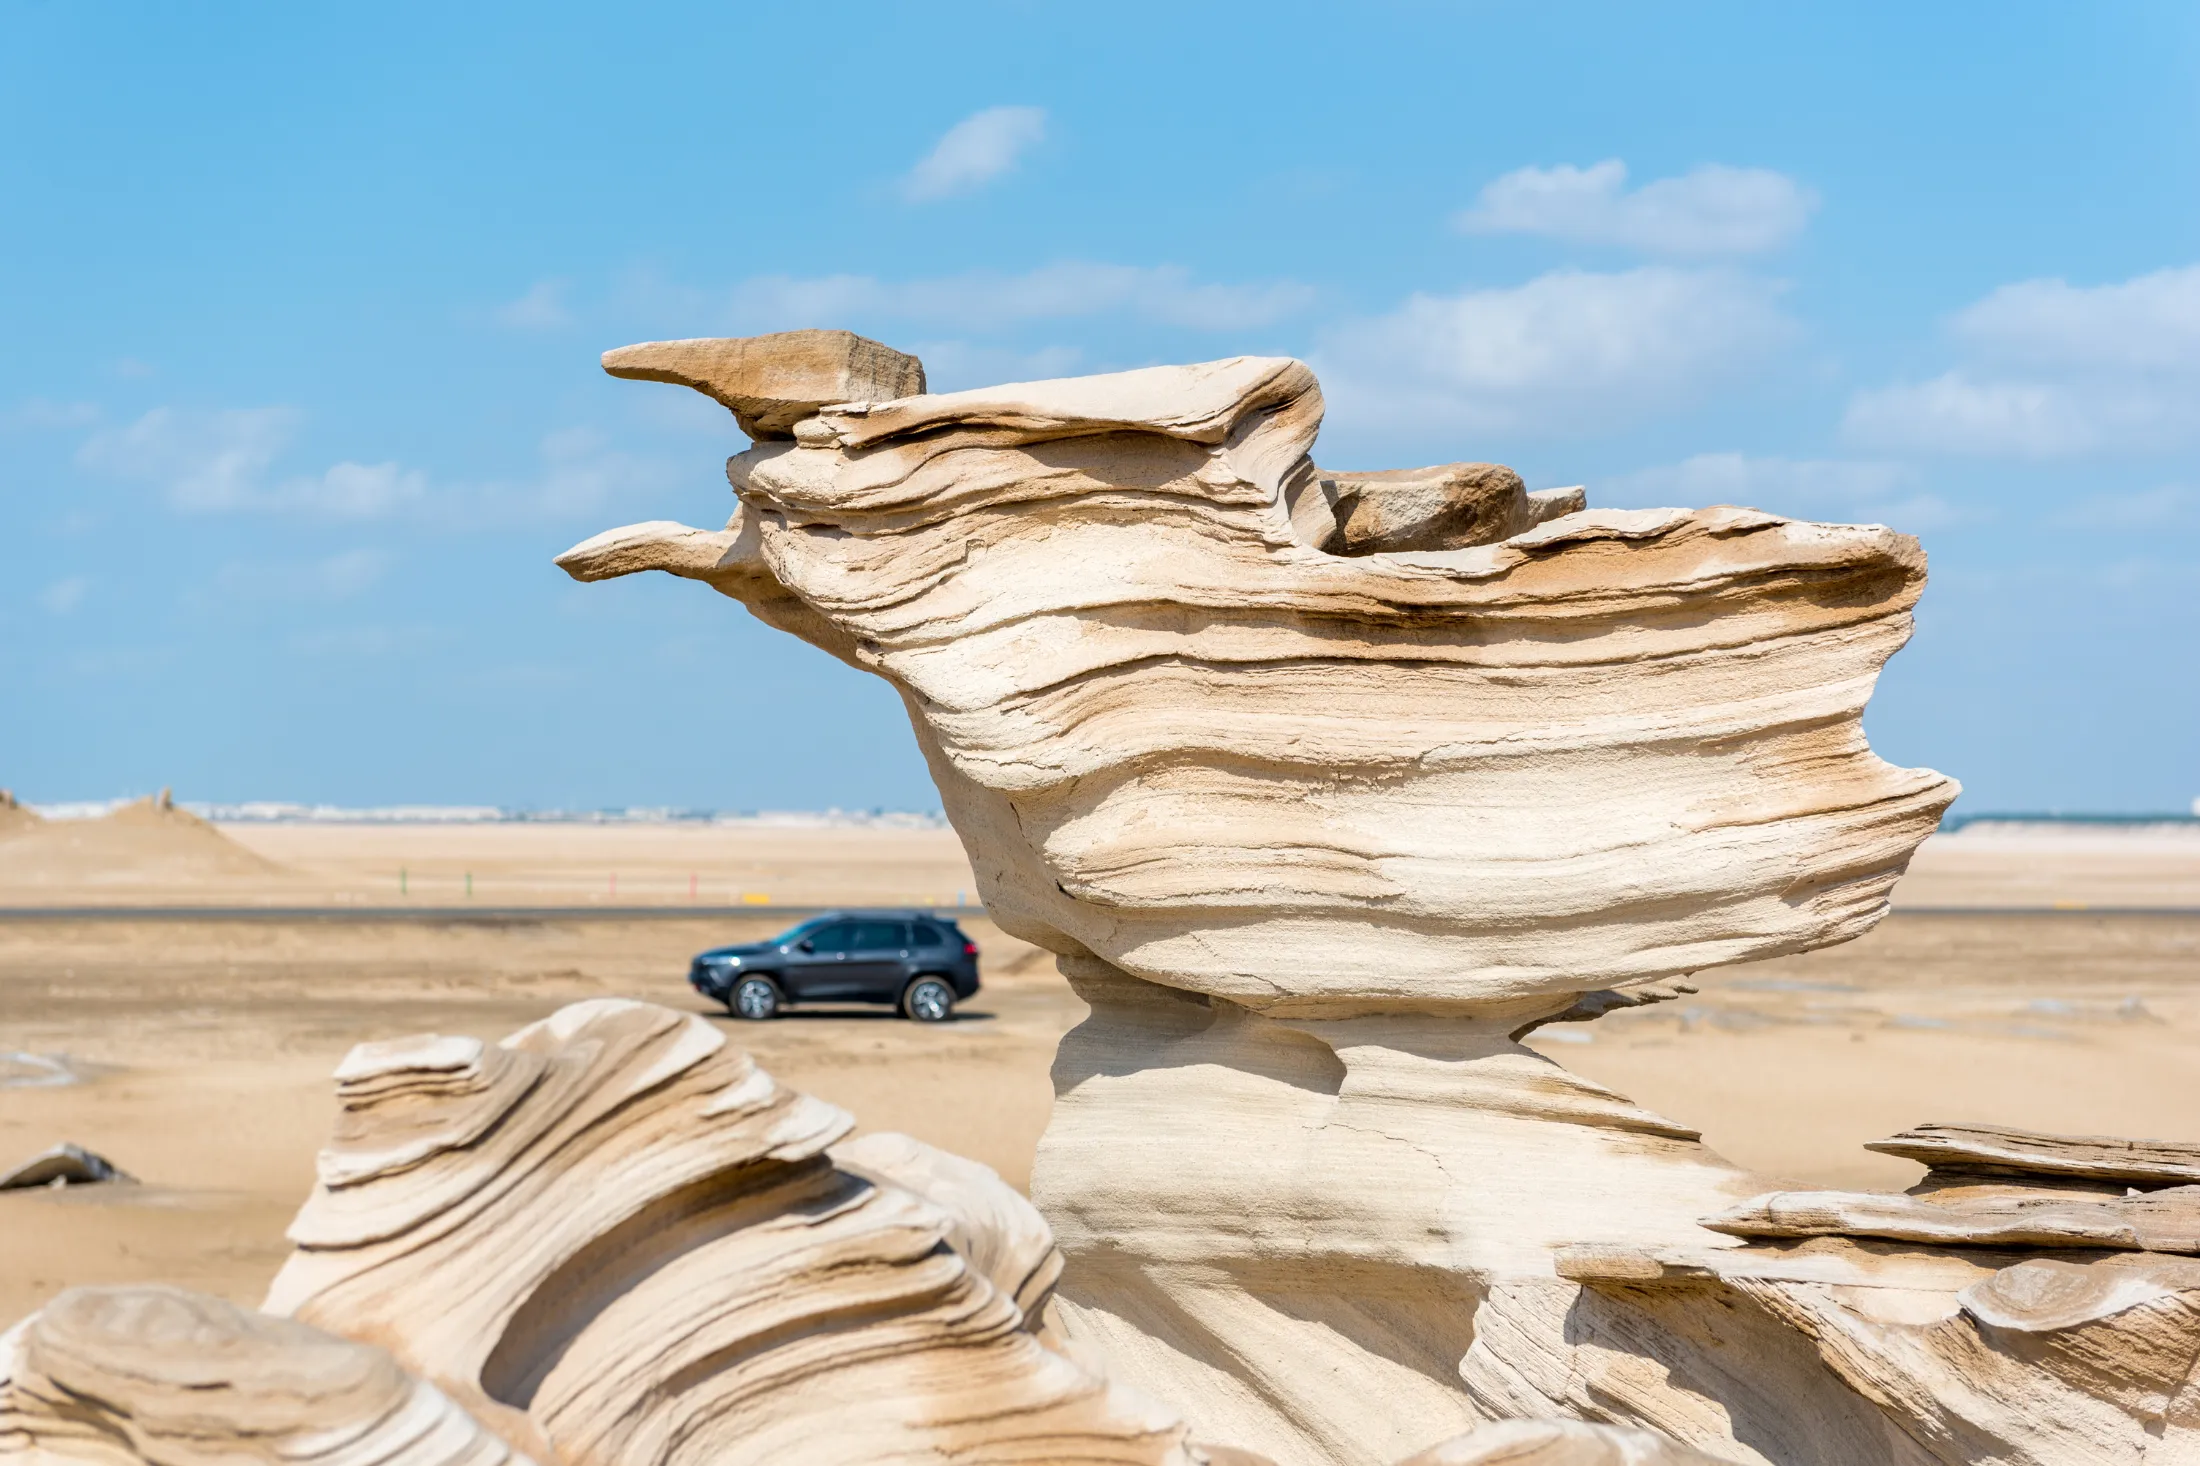 Driving among the Fossil dunes towards Long Salt Lake Abu Dhabi